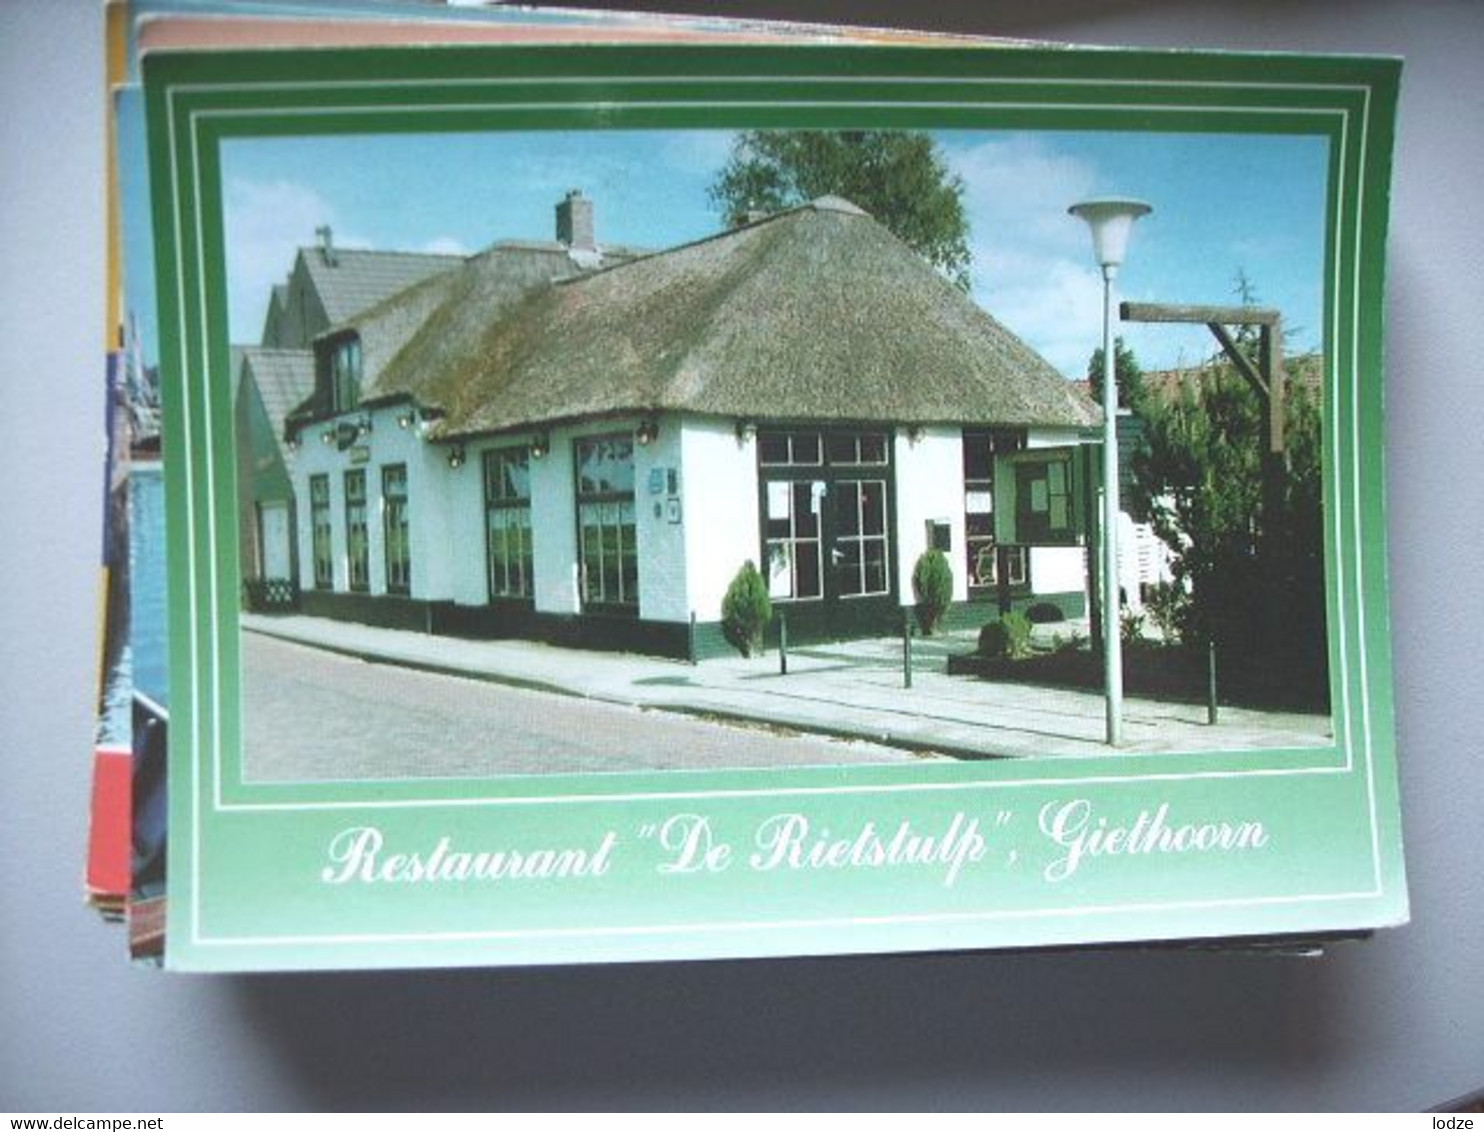 Nederland Holland Pays Bas Giethoorn Met Restaurant De Rietstulp - Giethoorn